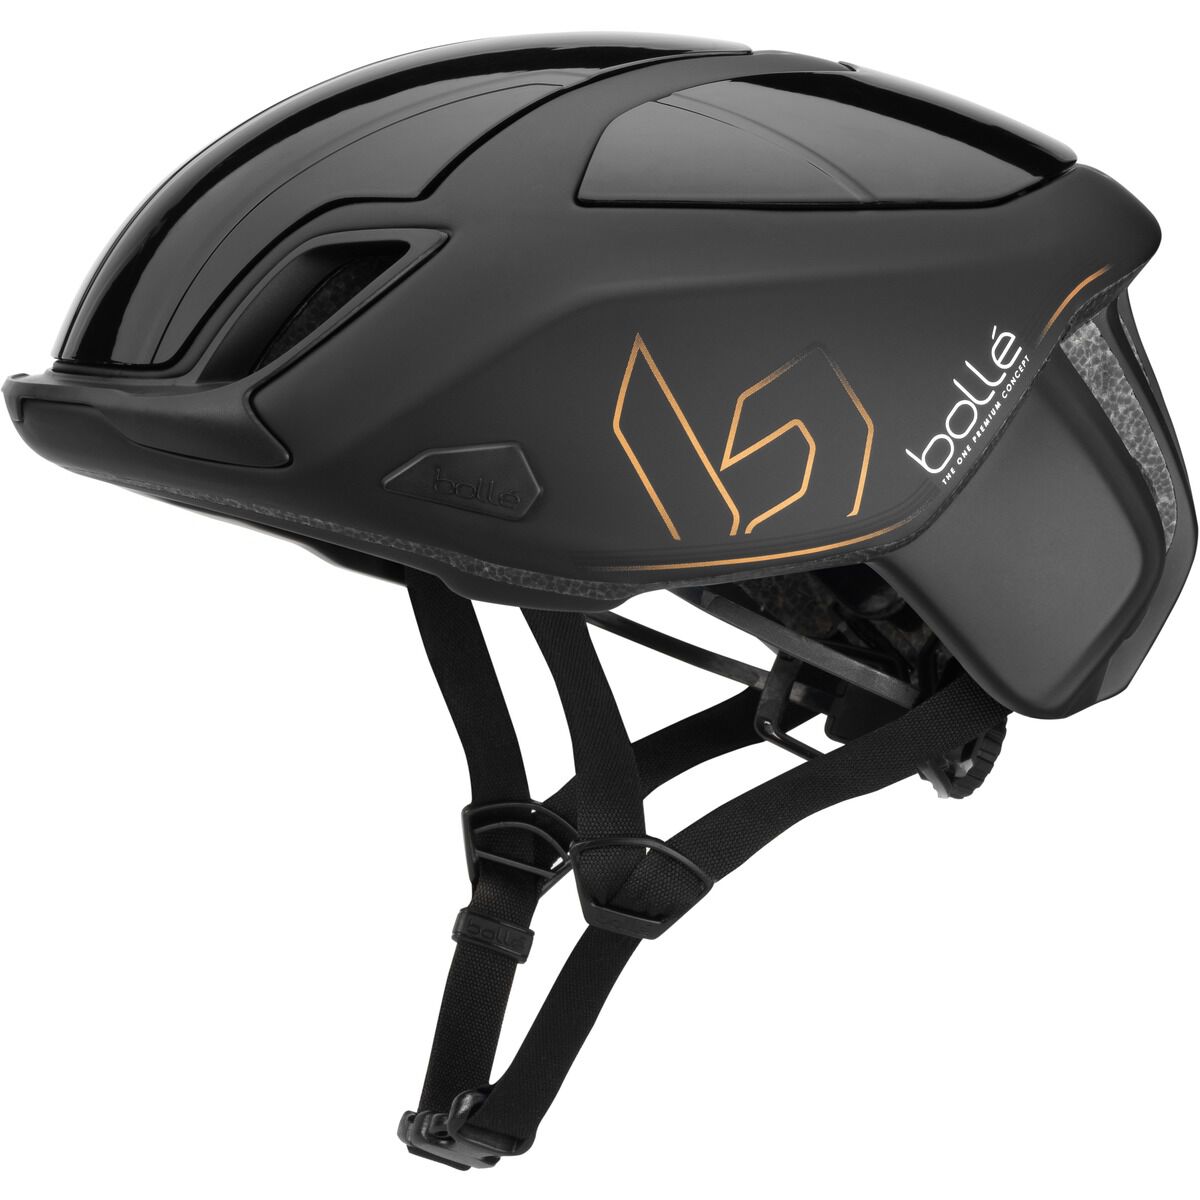 Bolle The One Road Standard 58-62cm Adjustable Black and Pink Helmet 31114 